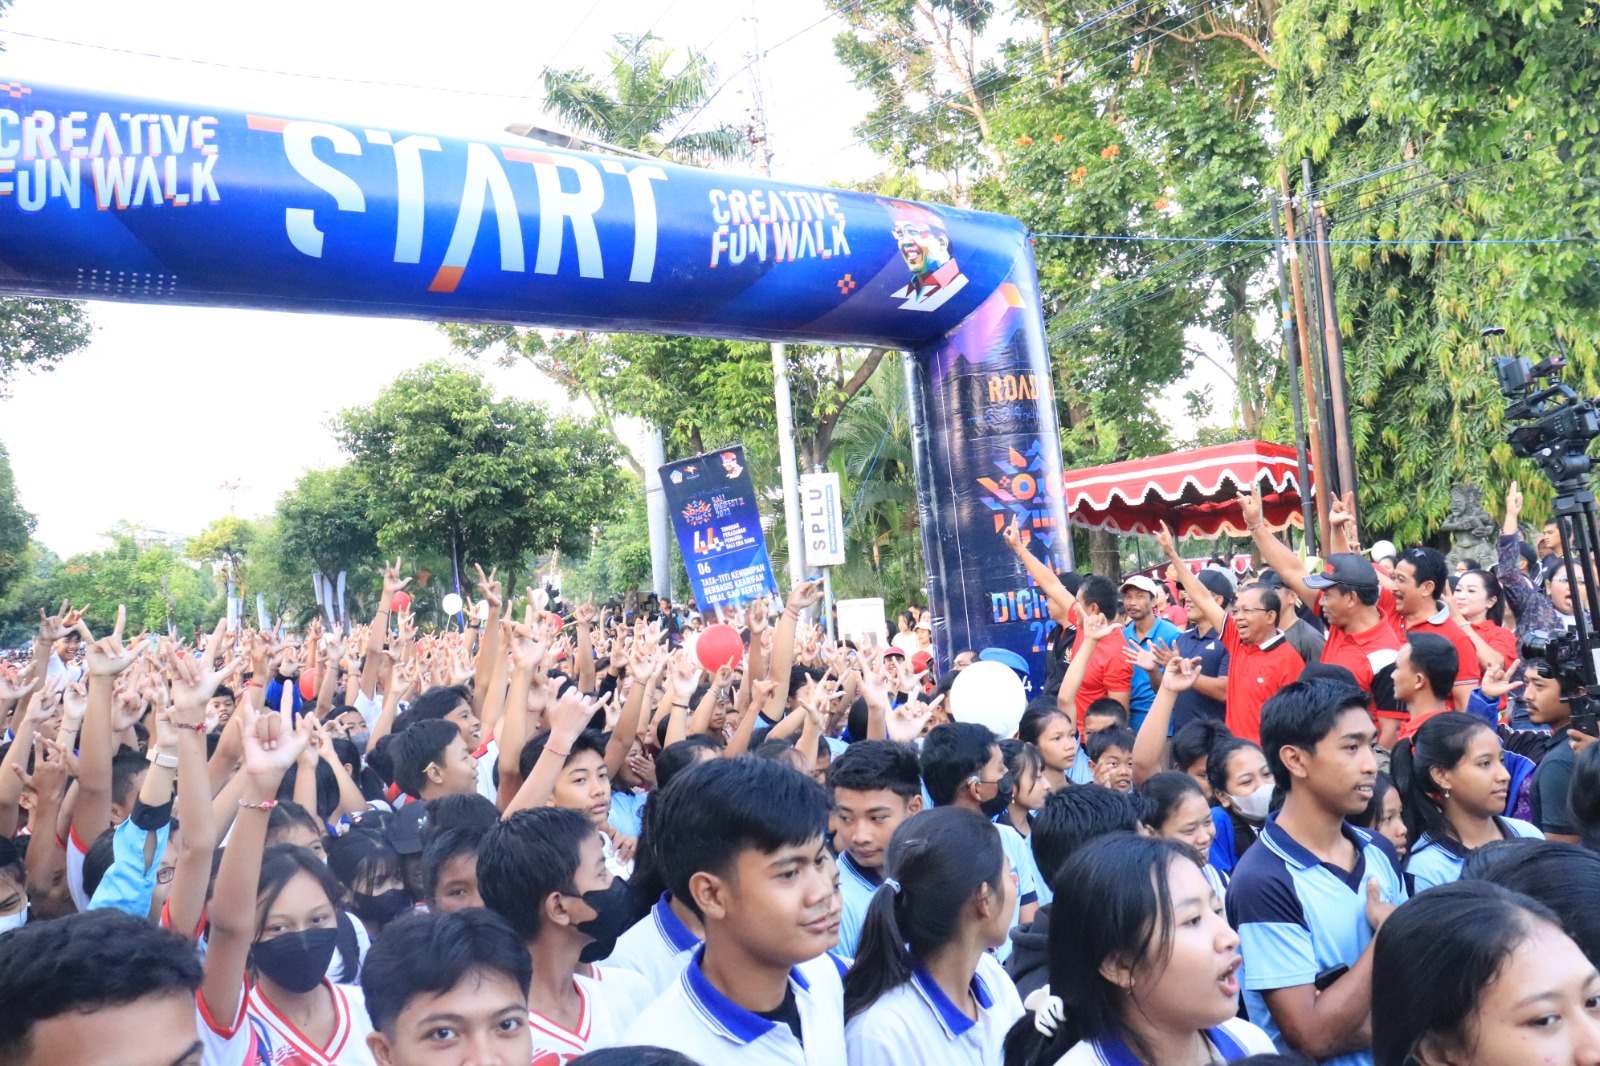 Acara Creative Tun Walk Bali Digifest 2023 Mendapatkan Banyak Antusias dari Ribuan Masyarakat